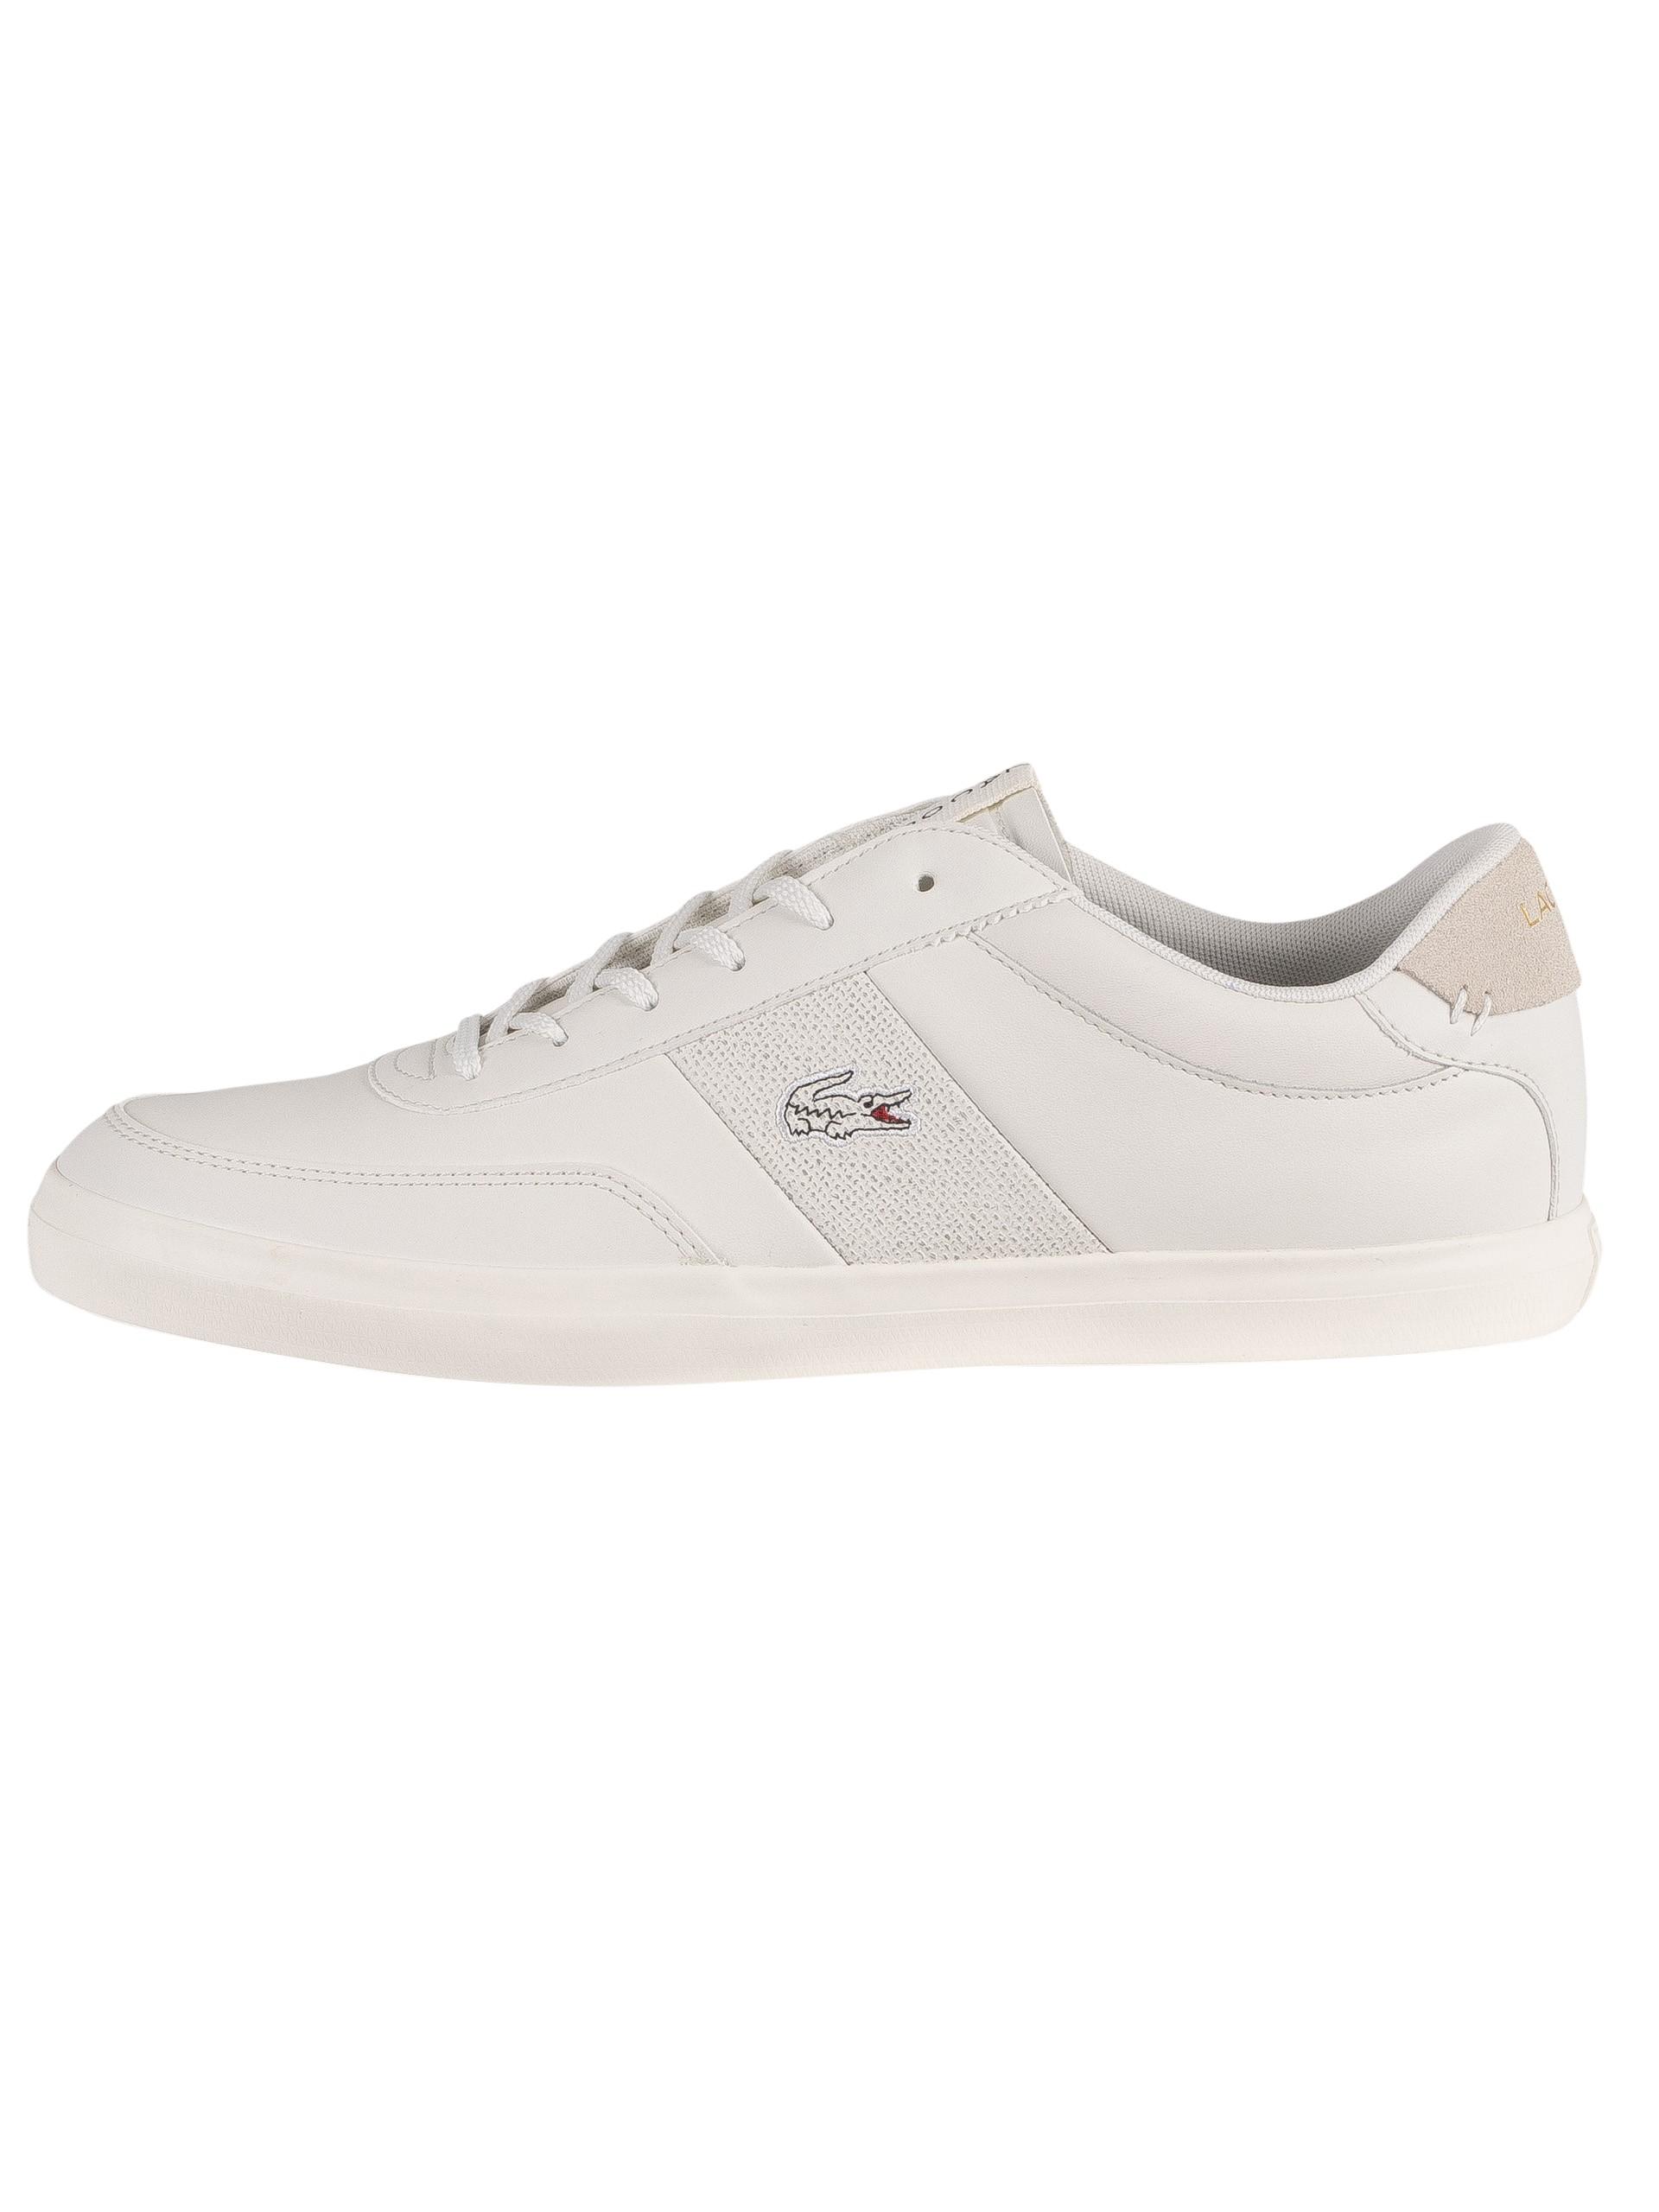 Lacoste Court Master 120 5 CMA White White Schuhe Sneaker Weiß 